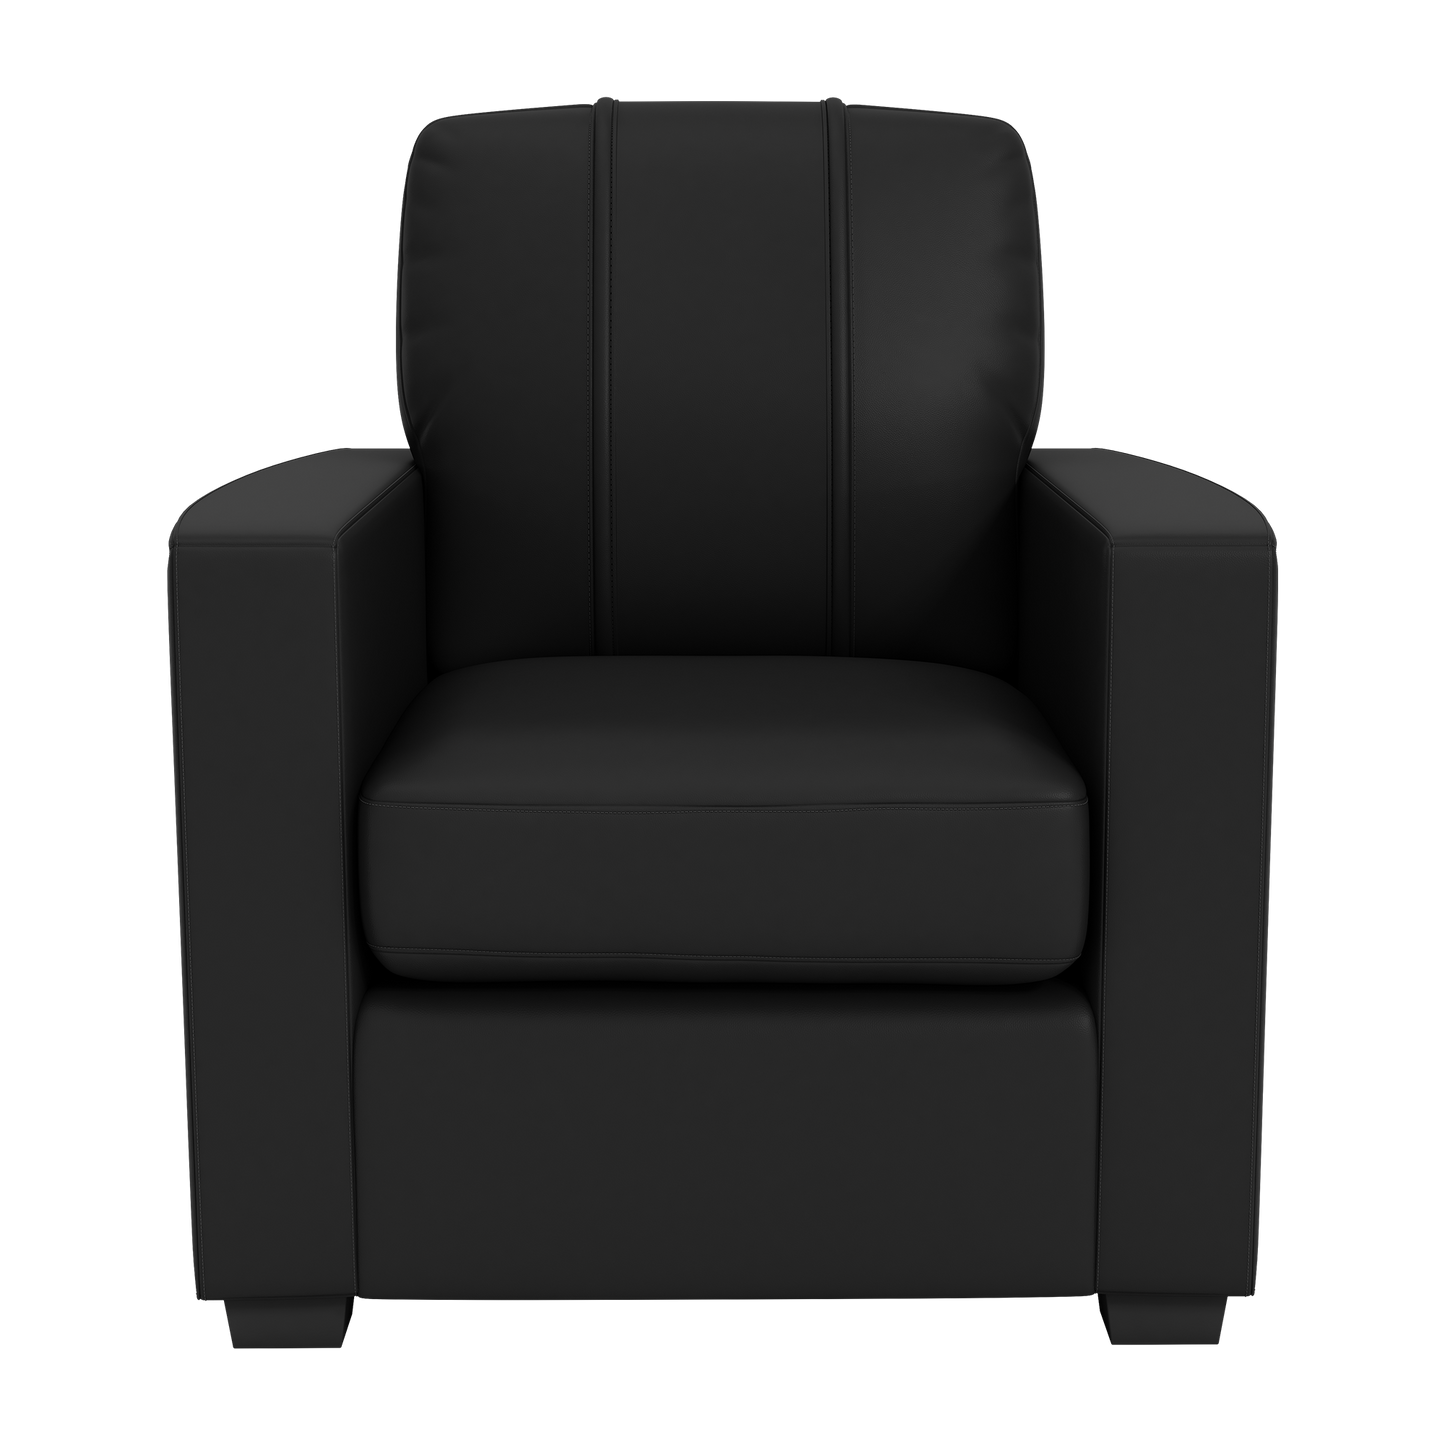 Silver Club Chair with Houston Astros Logos